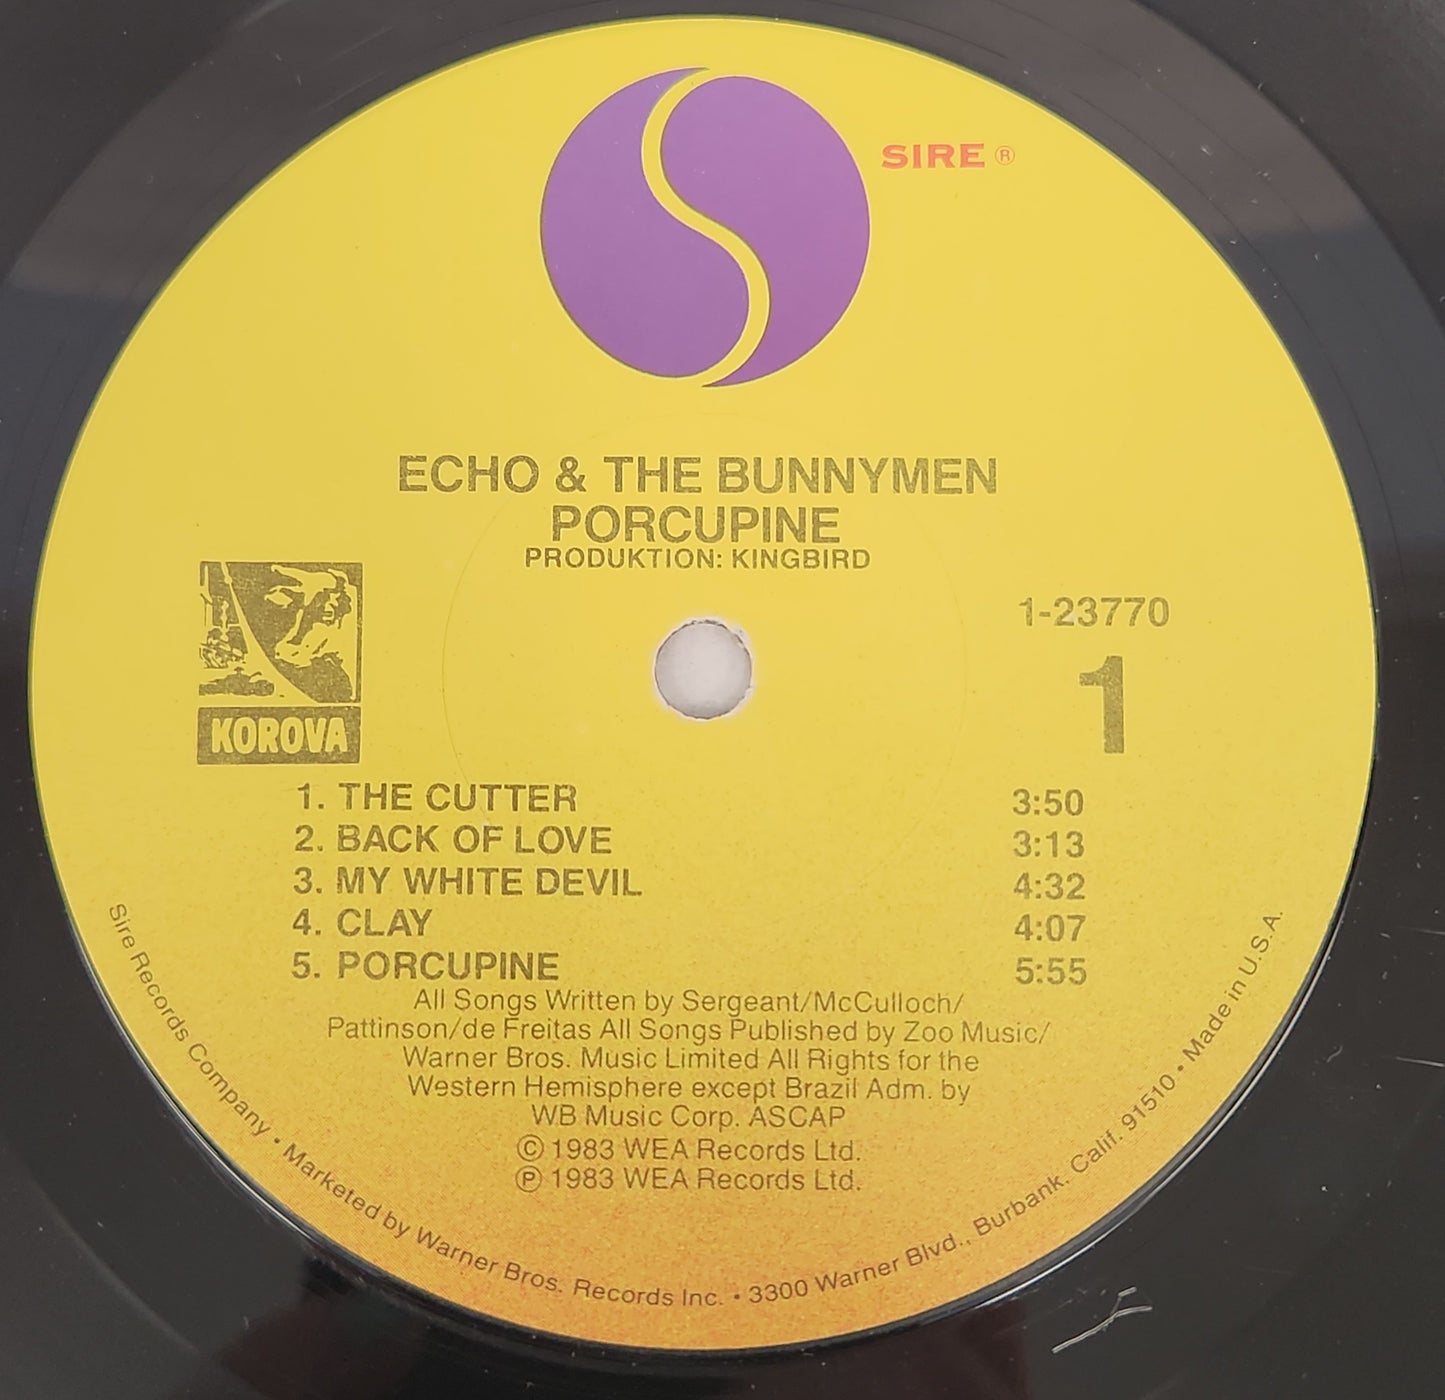 Echo & The Bunnymen "Porcupine" 1983 New Wave Indie Rock Record Album